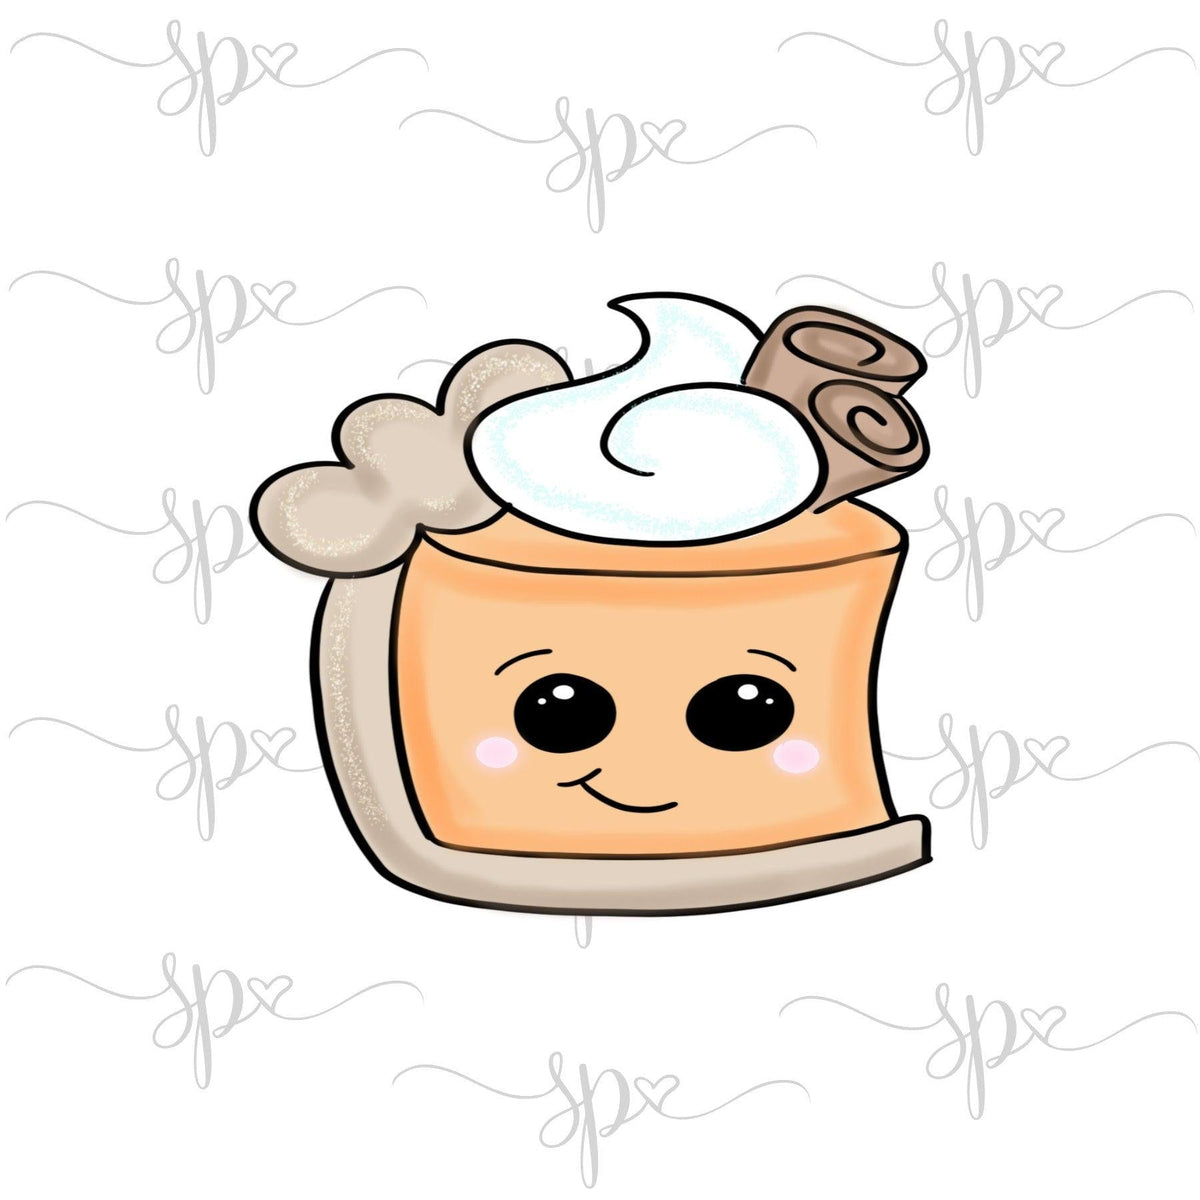 Chubby Pie Slice 2018 Cookie Cutter - Sweetleigh 